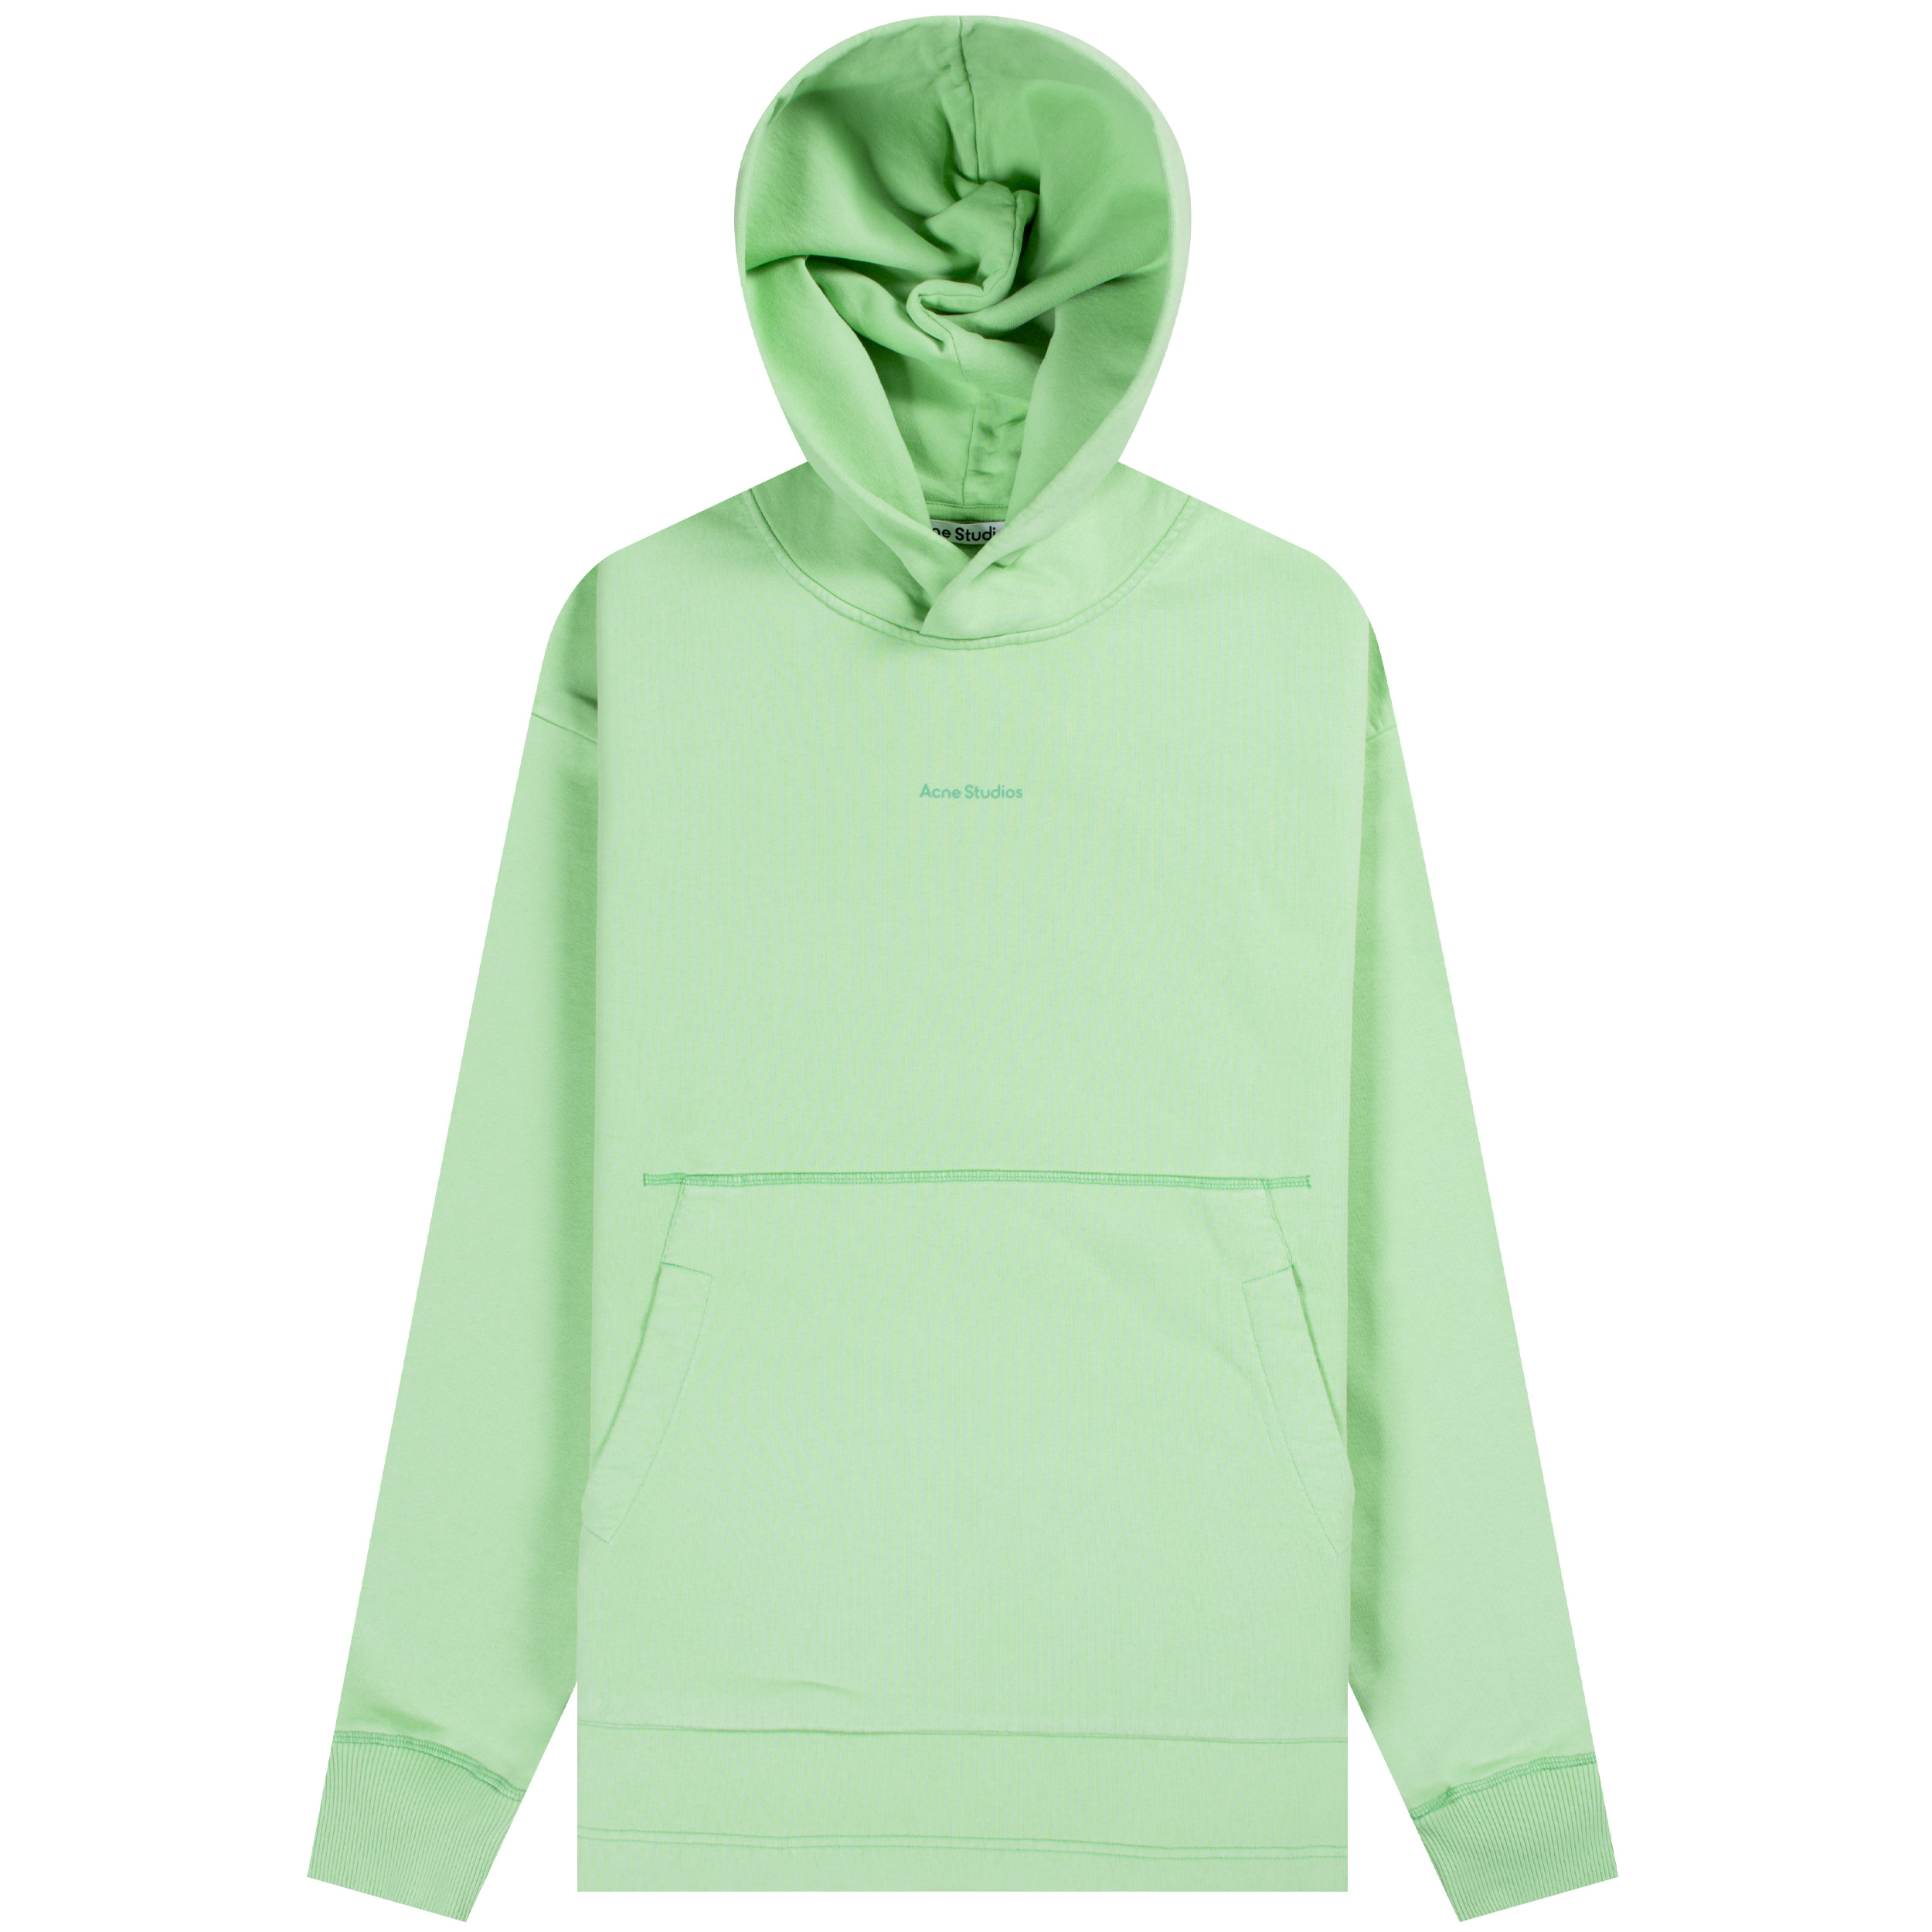 Acne Studios ’Oversized Centre Logo’ Hooded Sweatshirt Mint Green